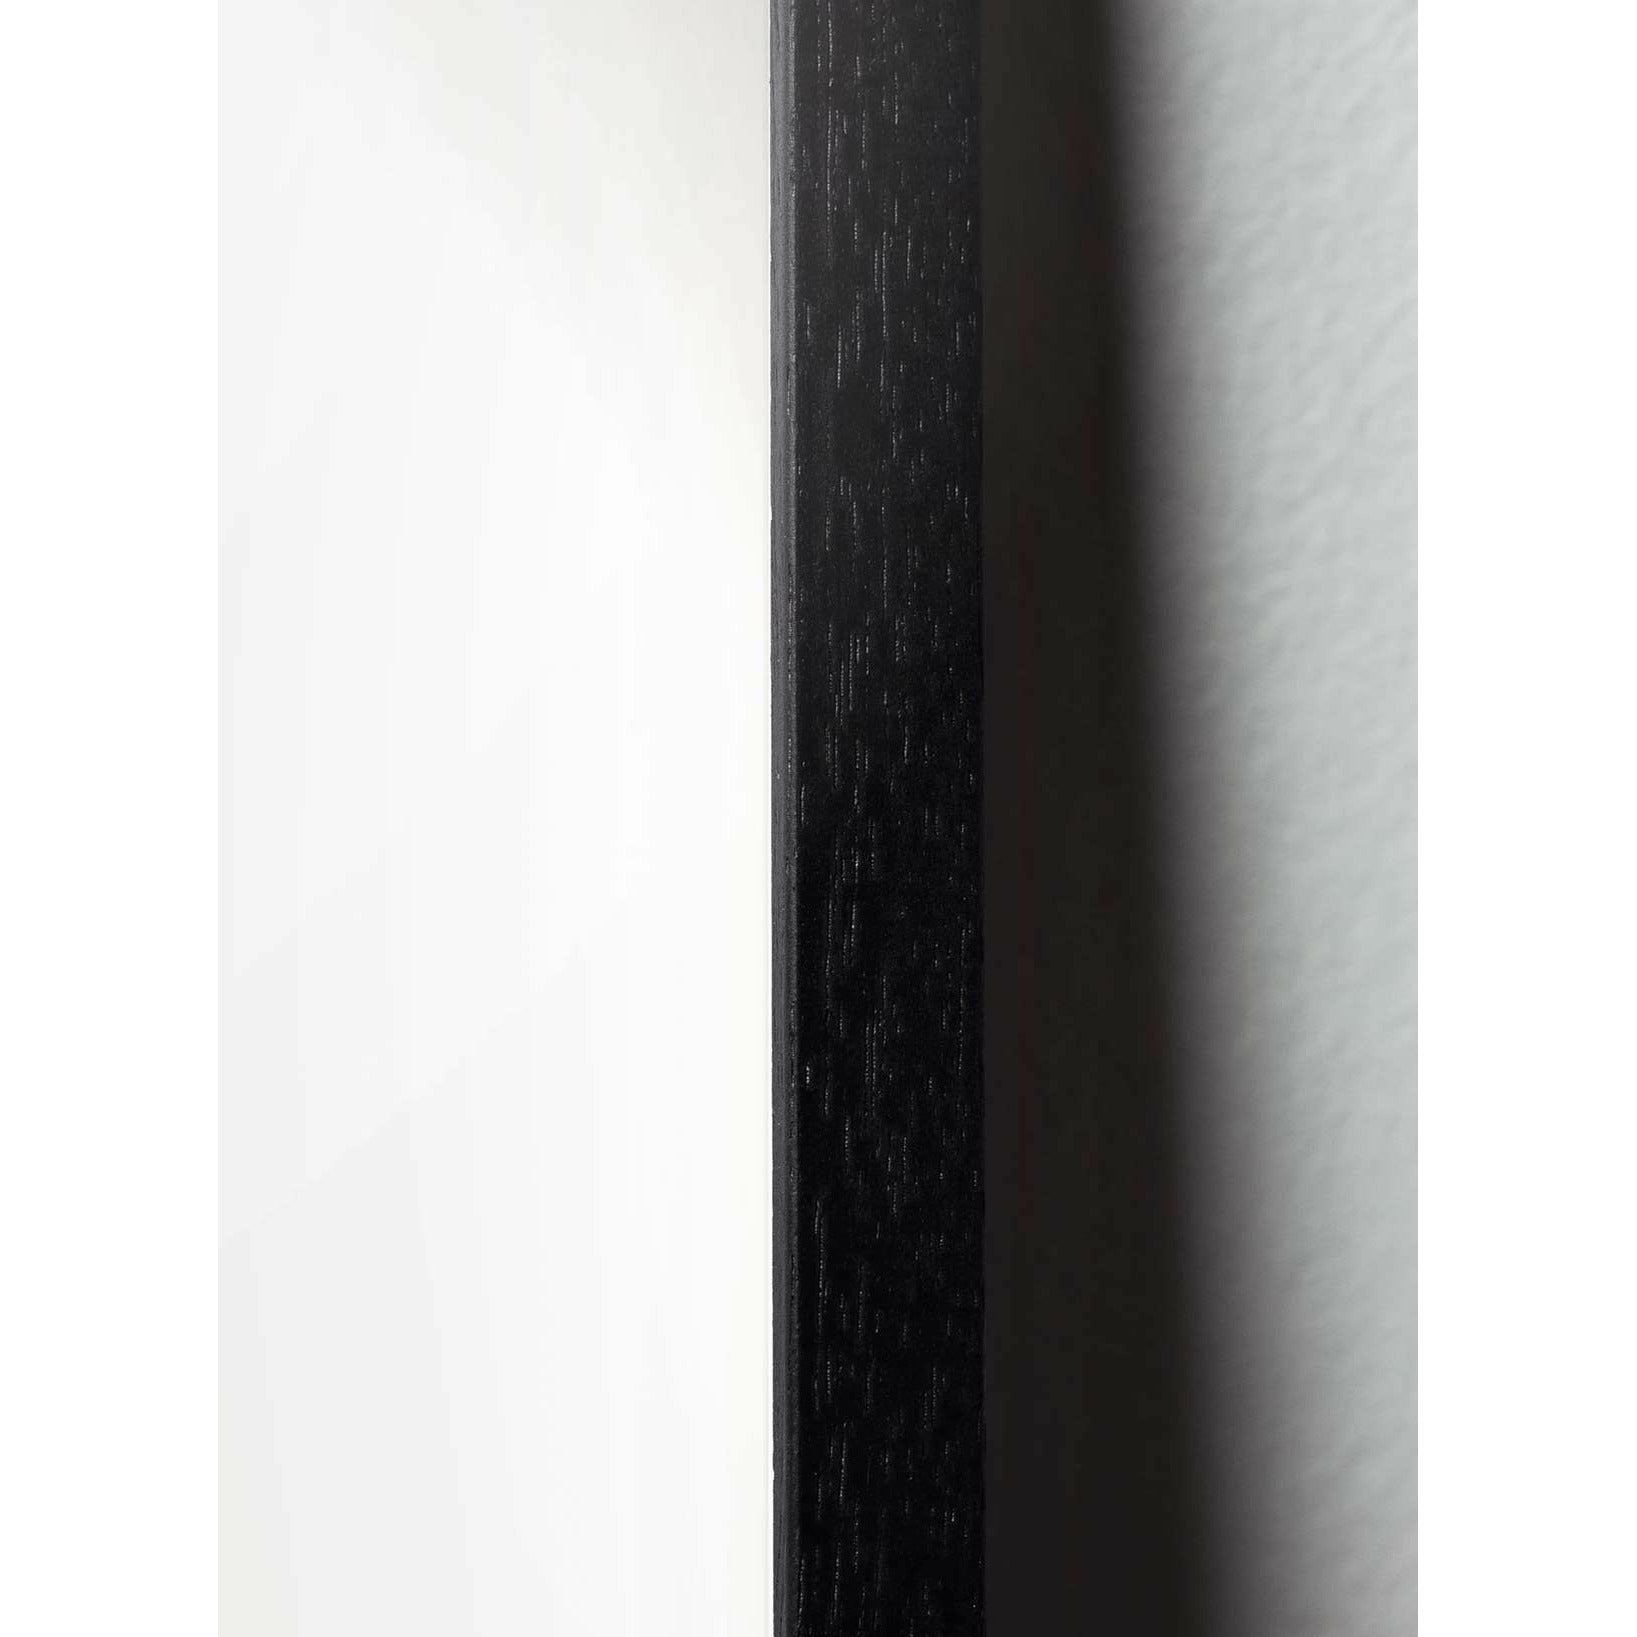 Brainchild Äggklassisk affisch, ram i svart -målat trä 30x40 cm, svart bakgrund